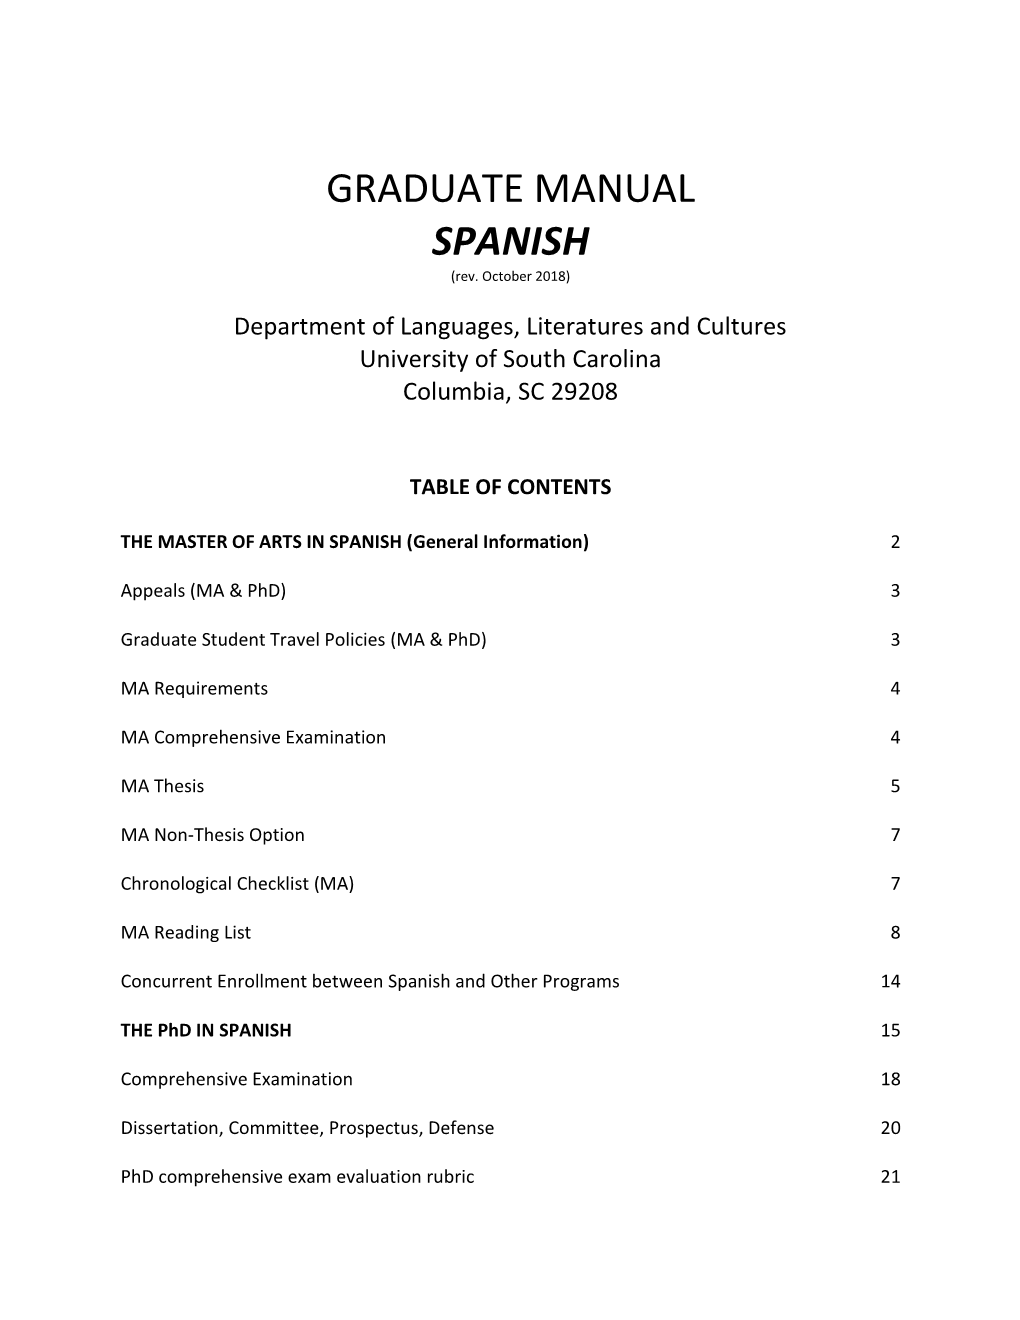 Spanish Program Graduate Studies Manual